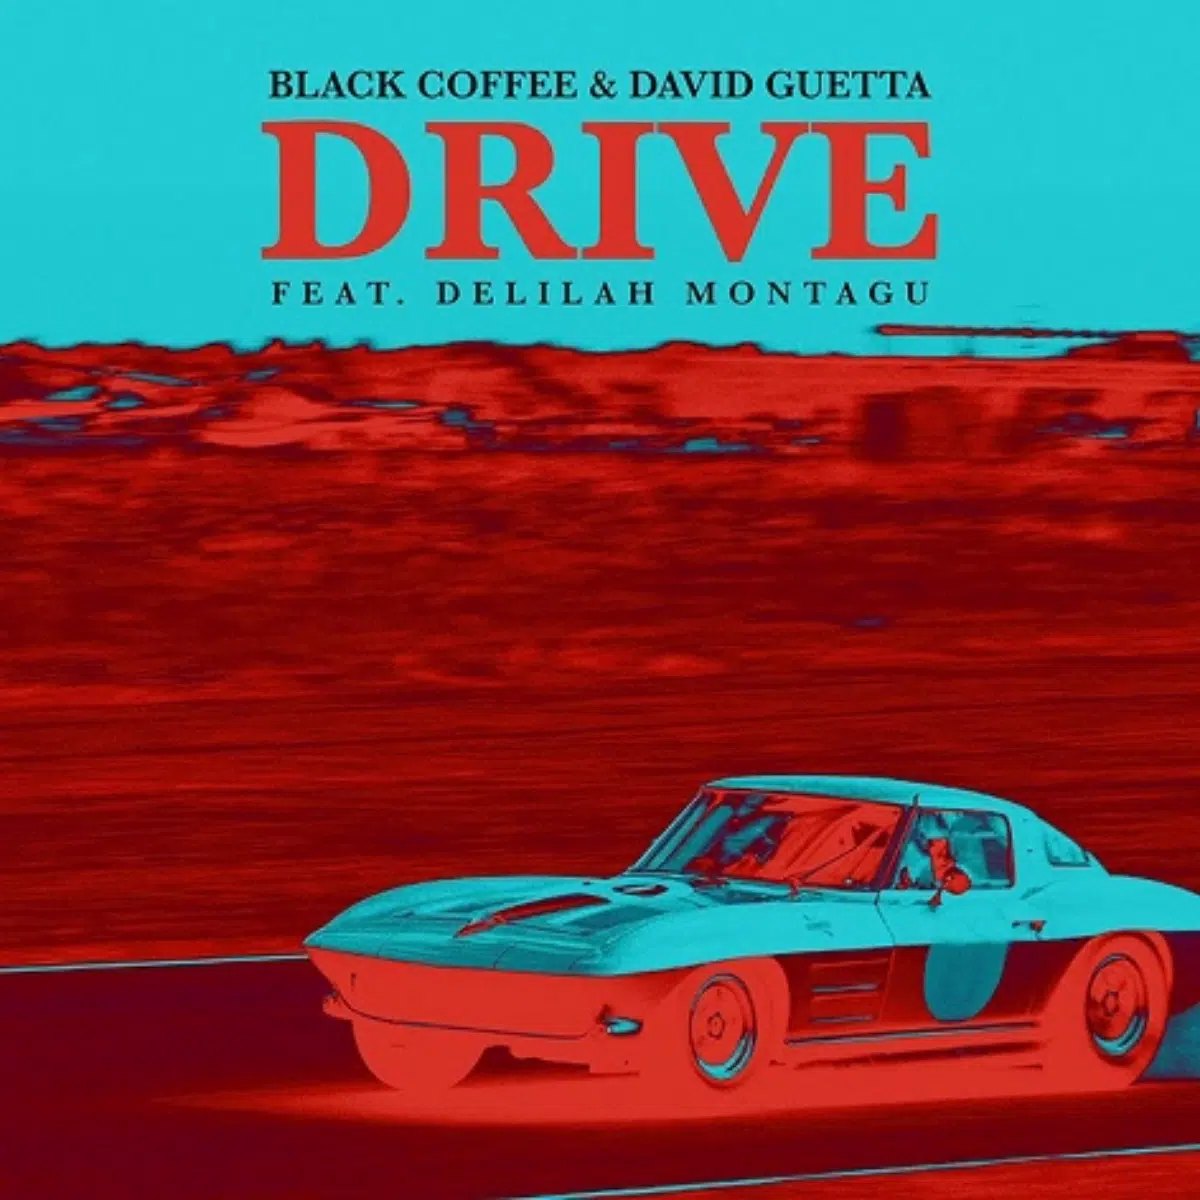 DOWNLOAD: Black Coffee & David Guetta Ft. Delilah Montagu – “Drive” Video + Audio Mp3